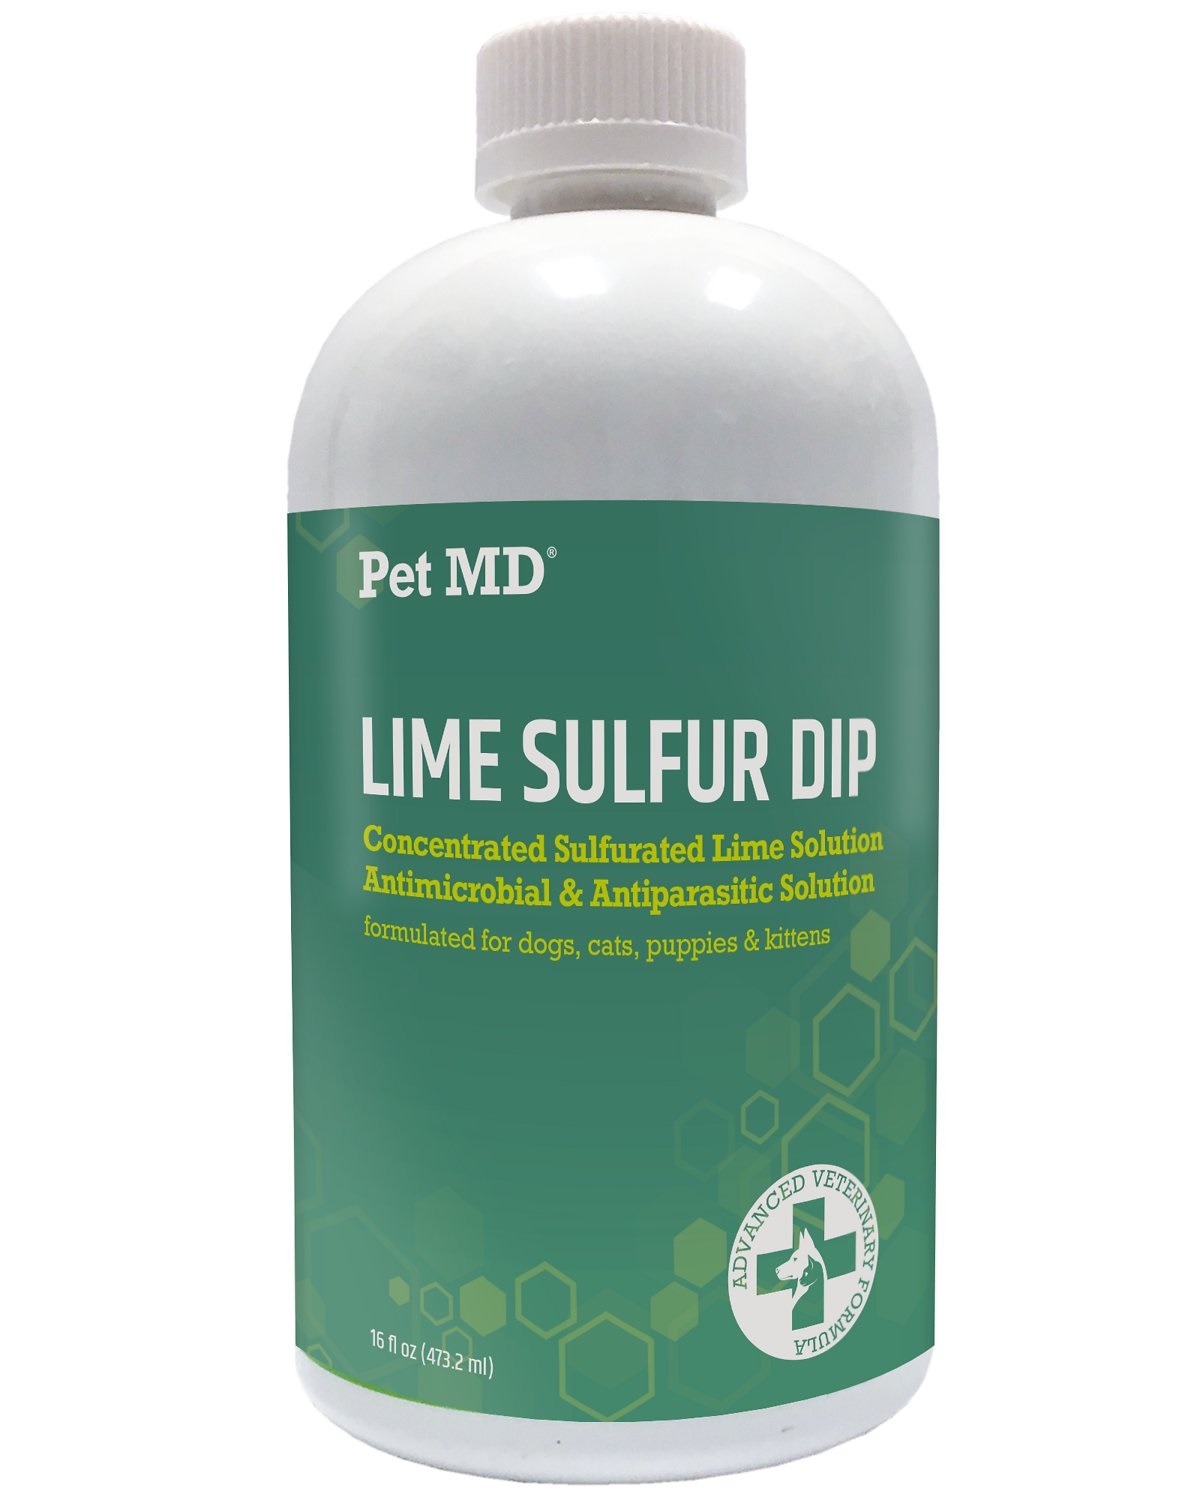 1-1 Pet MD Lime Sulfur Dip Pet Treatment, 16-oz bottle By Pet MD Online Shopping Pet Products